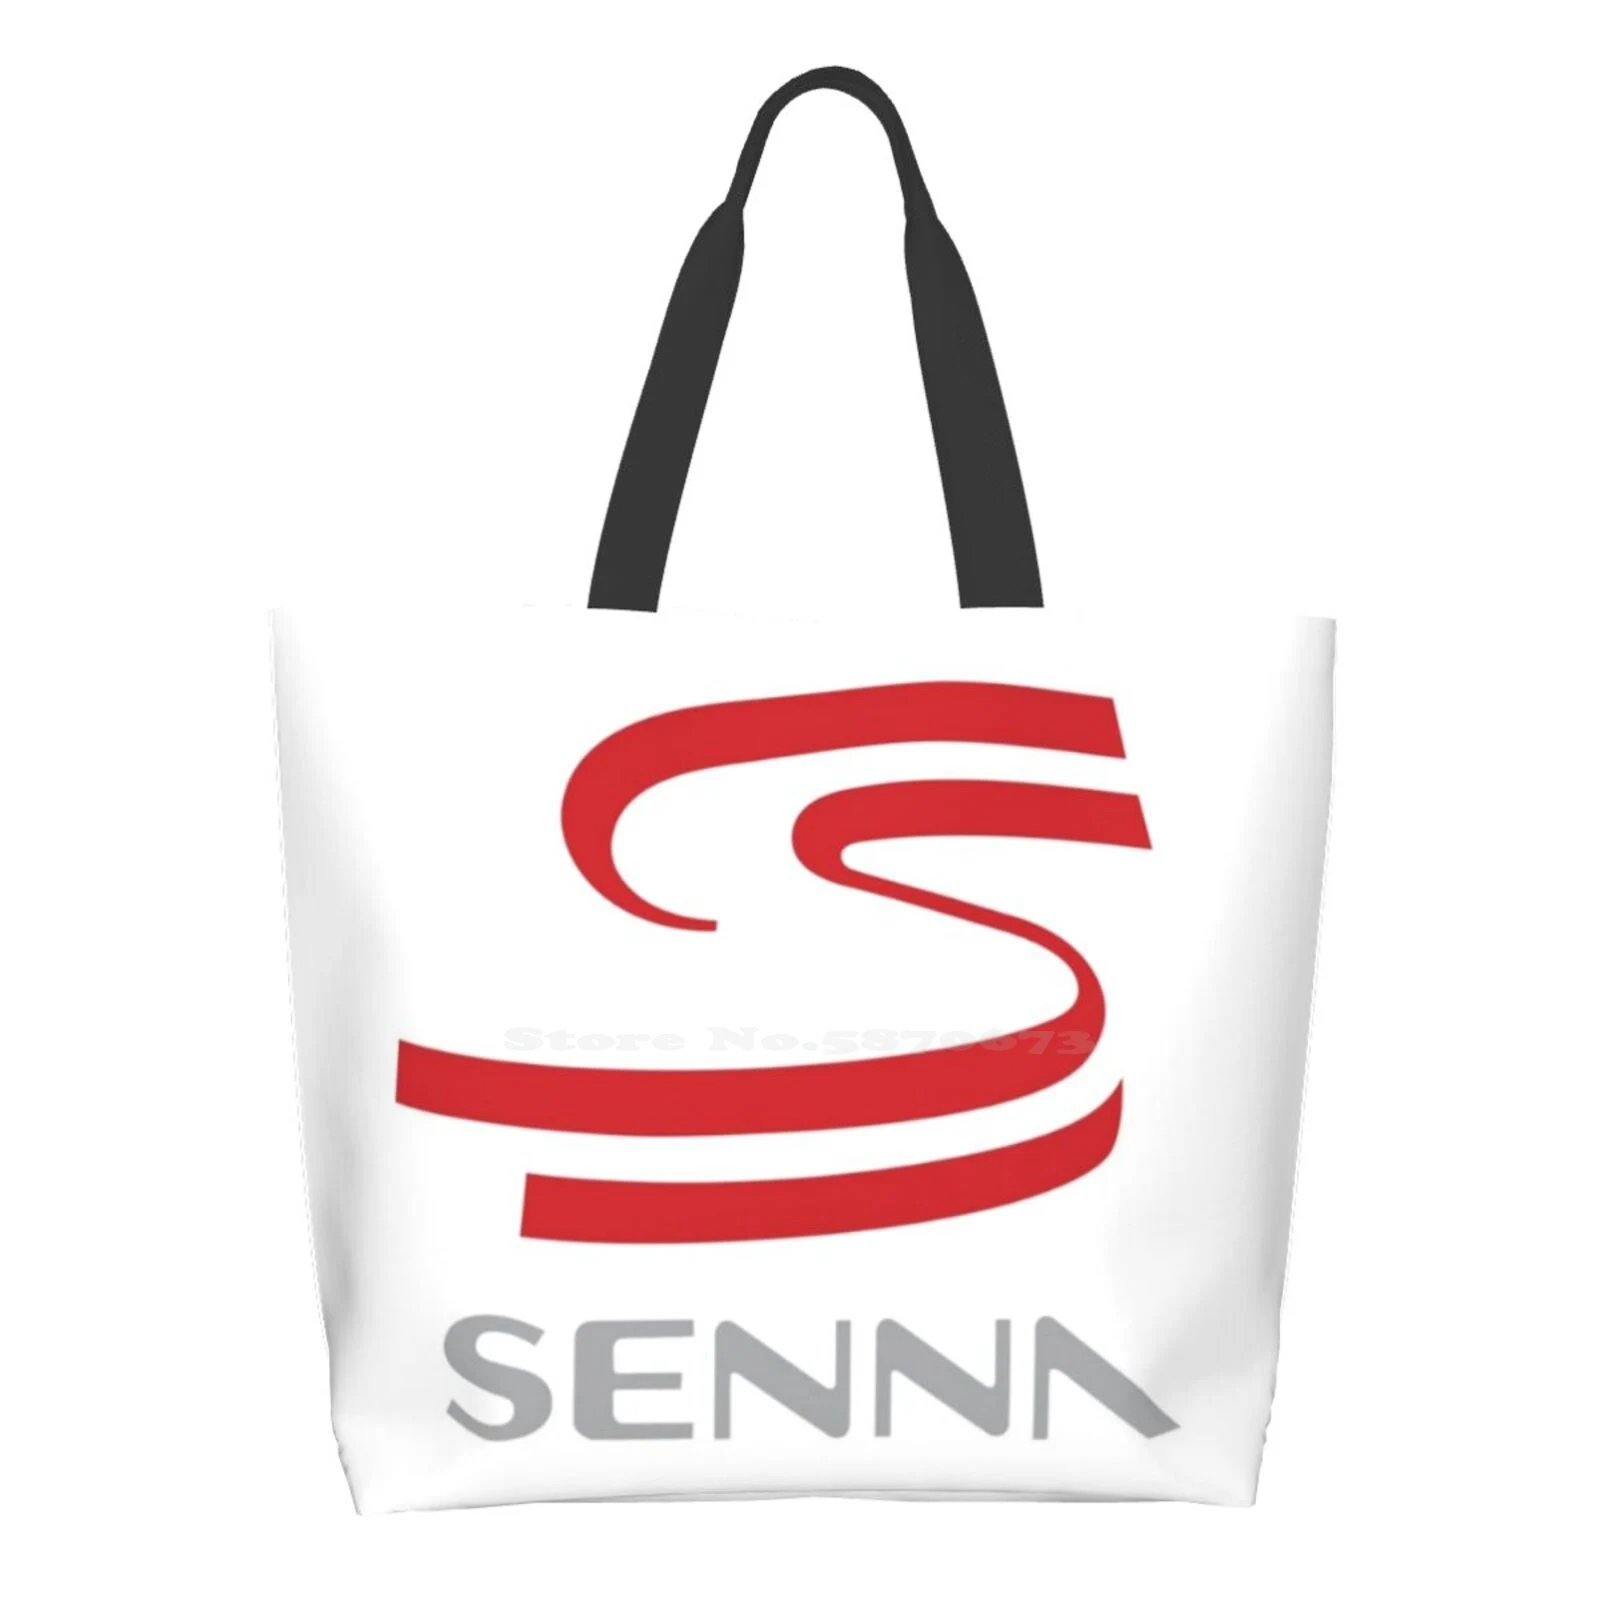 

Driver Women Totes Shoulder Bags For Travel Girls Handbag Shopper Bag Senna Driver Brazil Monaco Monza Imola